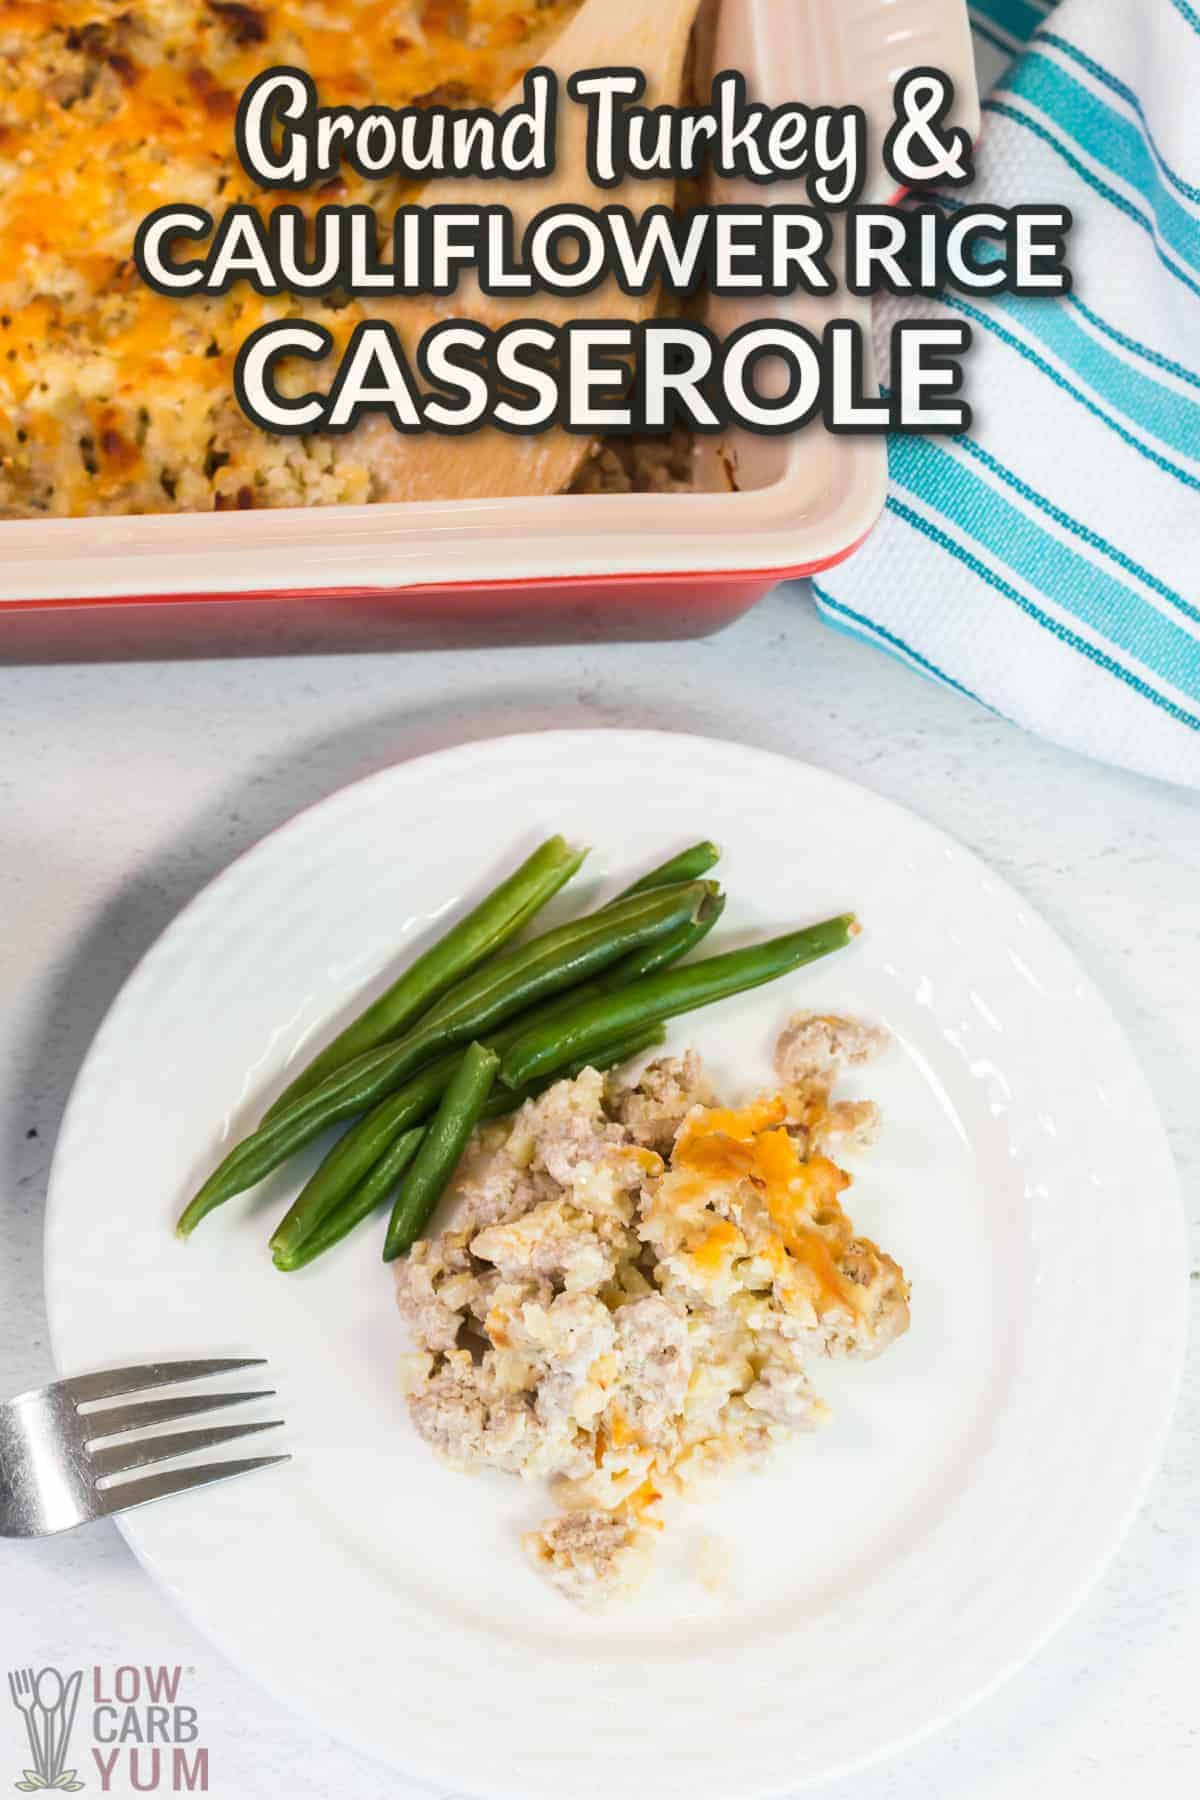 ground turkey and cauliflower rice casserole with text overlay.